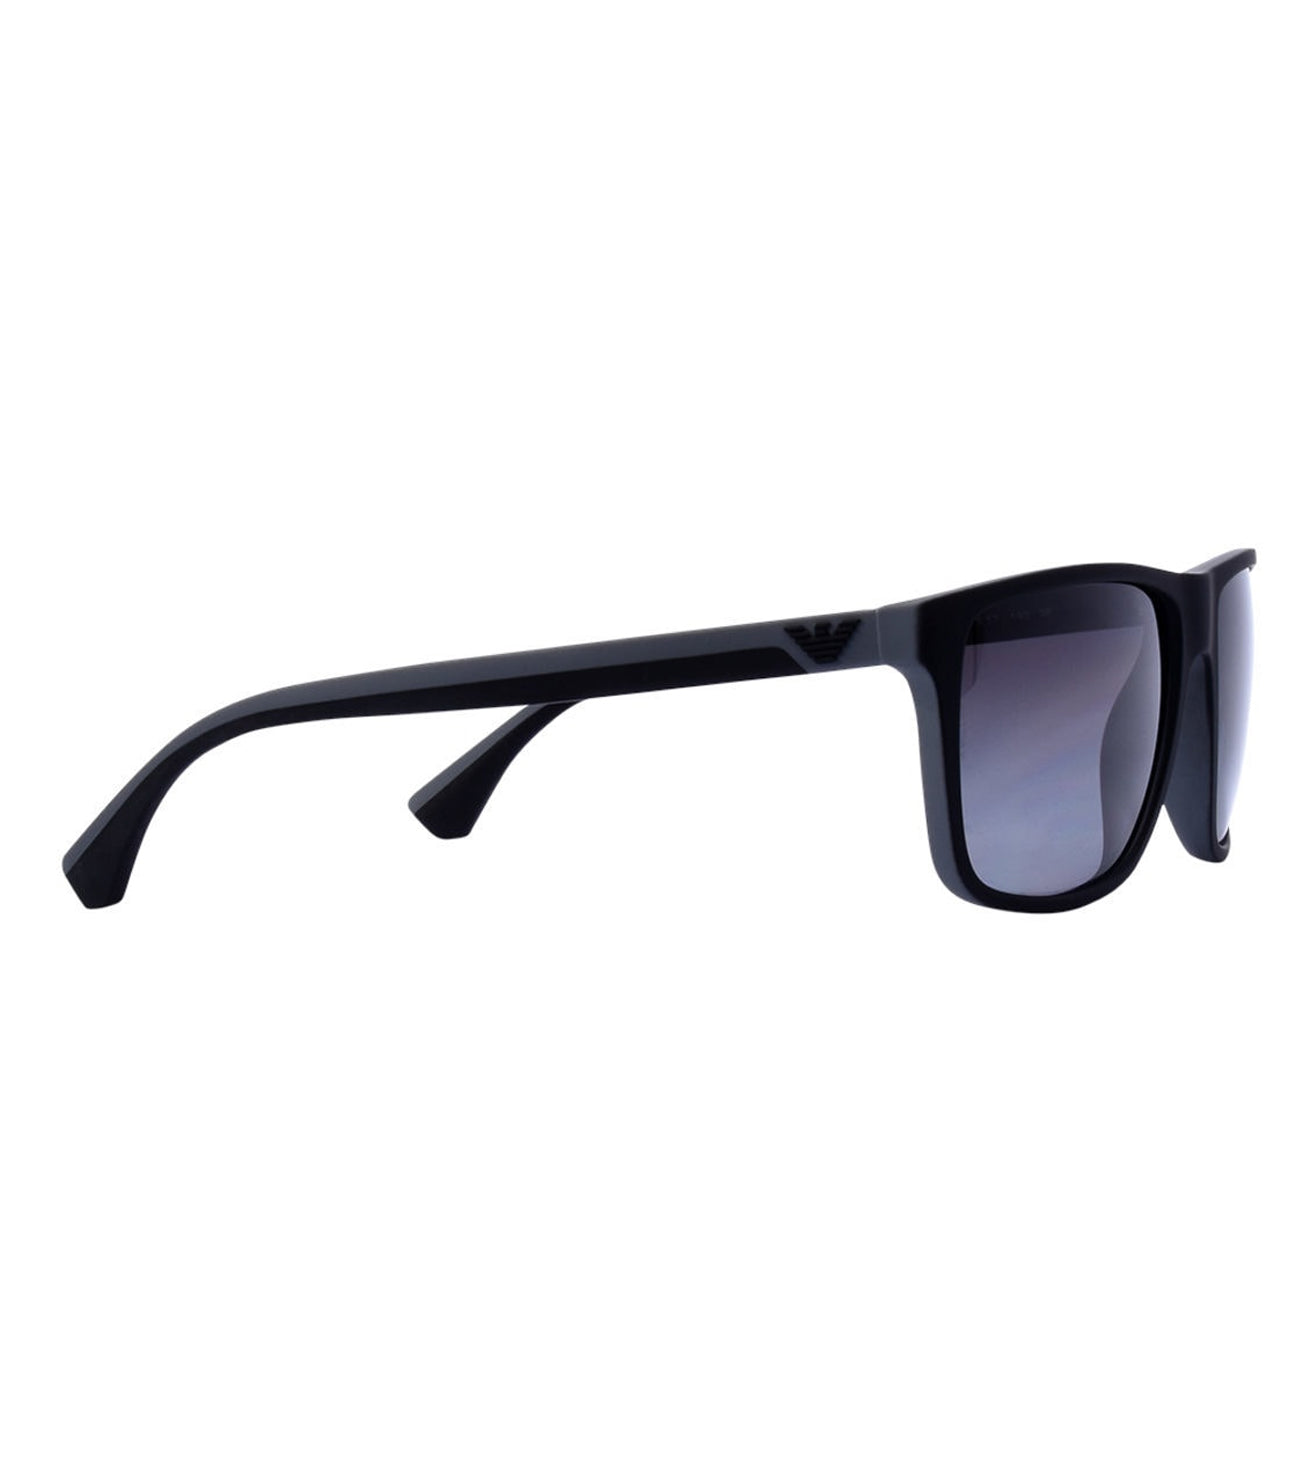 Square Black And Grey Gardient Lens Sunglasses